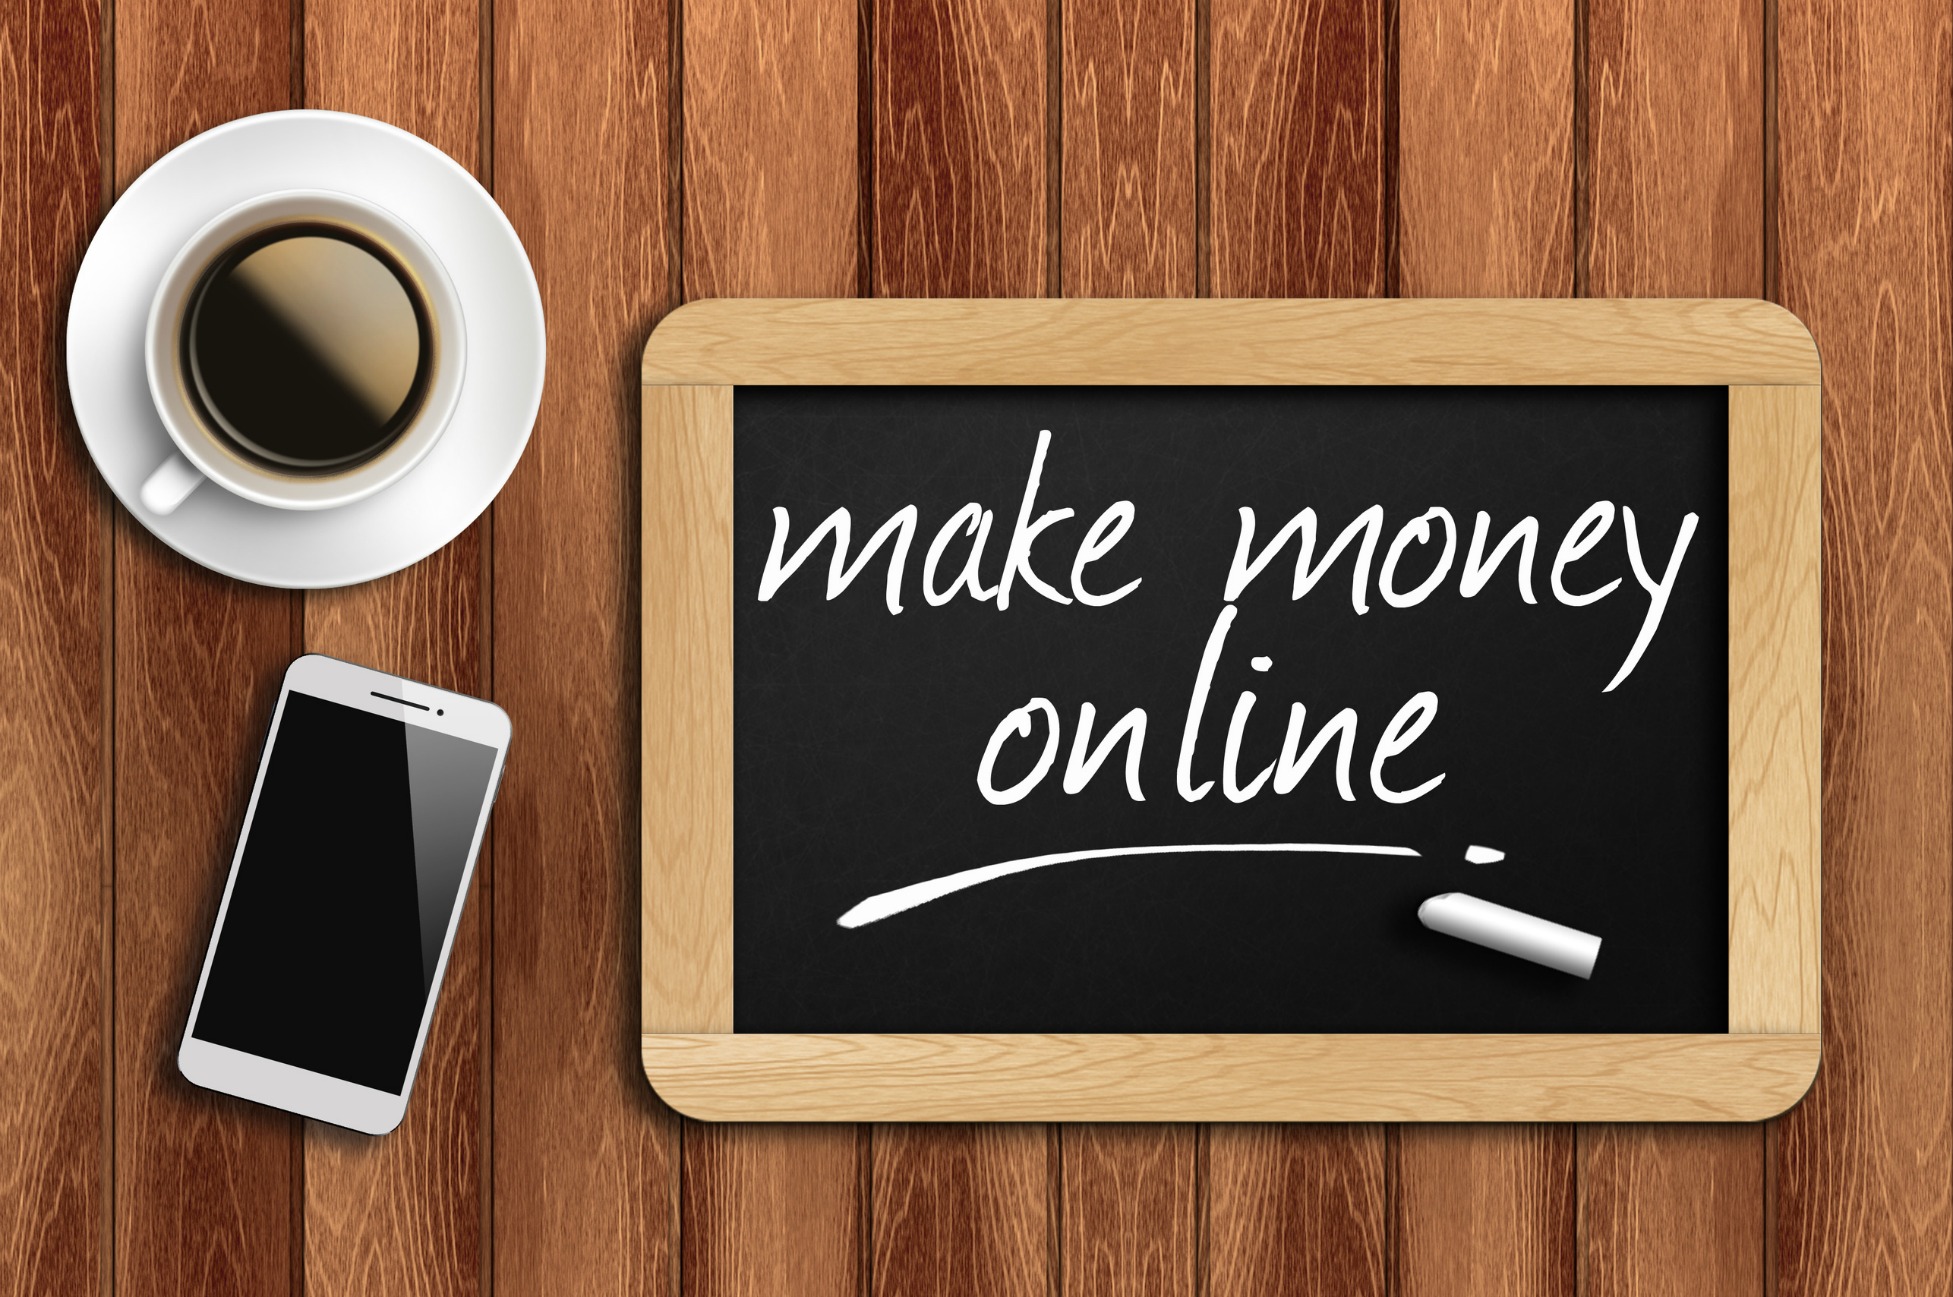 5 Ways to Make Money Writing Online